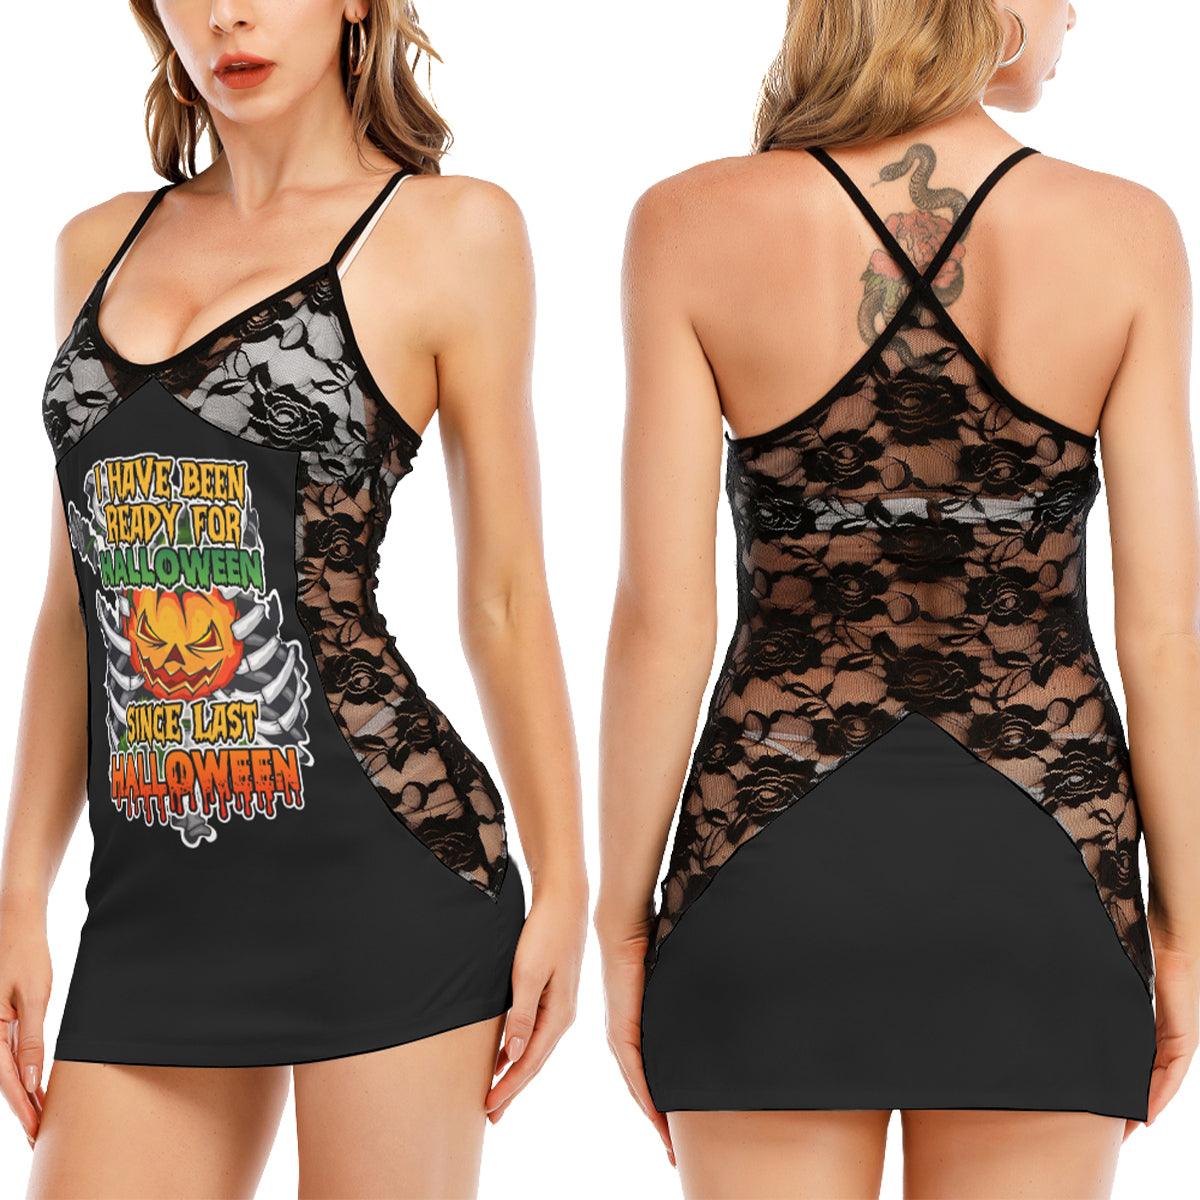 Ready For Halloween All-Over Print Women Black Lace Cami Dress, Hot Nightwear For Women - Wonder Skull